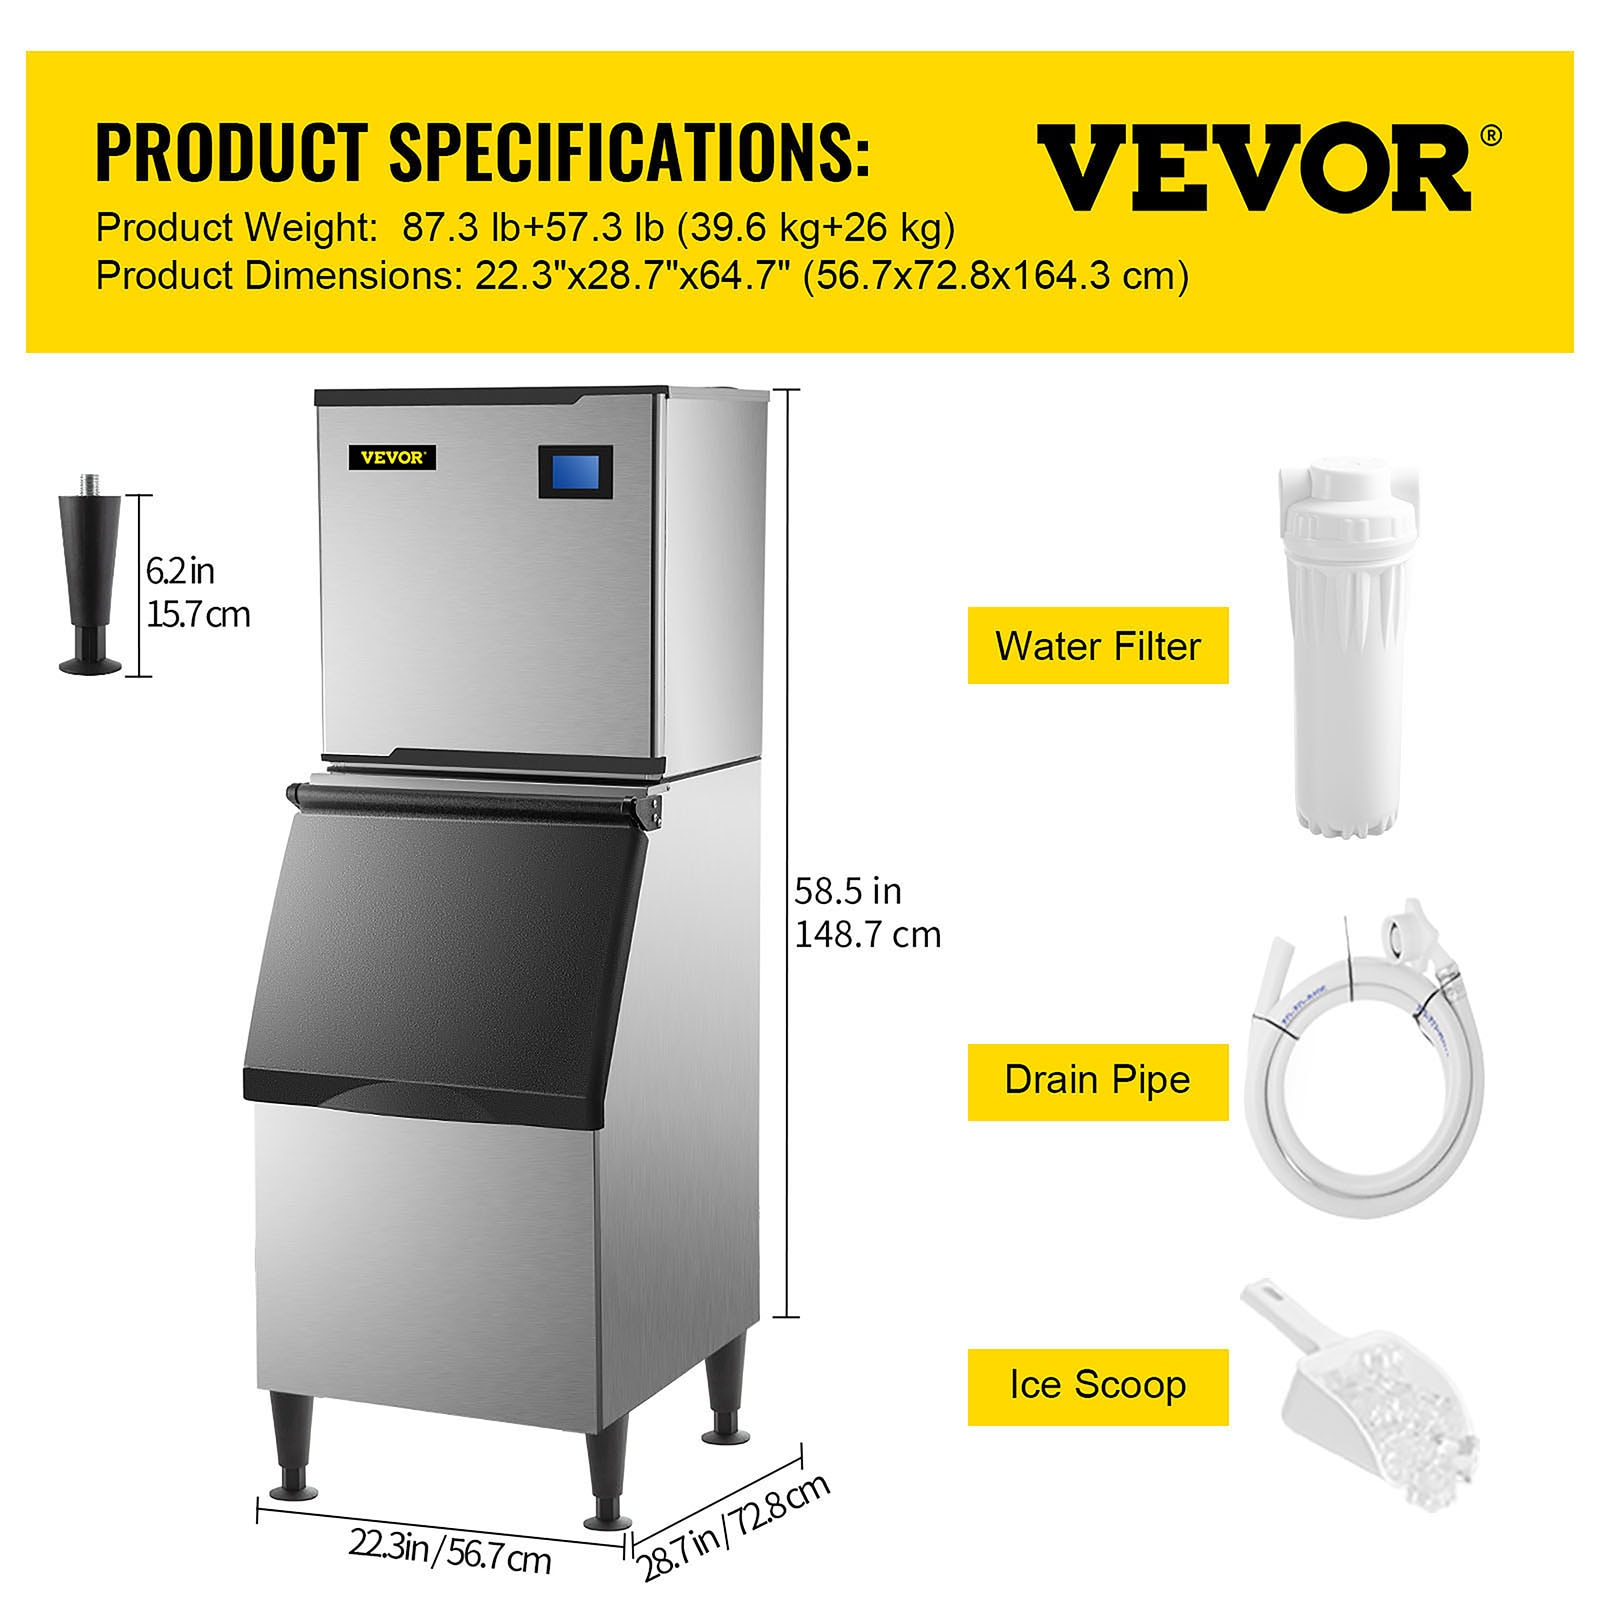 VEVOR 110V Commercial 440 lb./24 H Freestanding Ice Maker